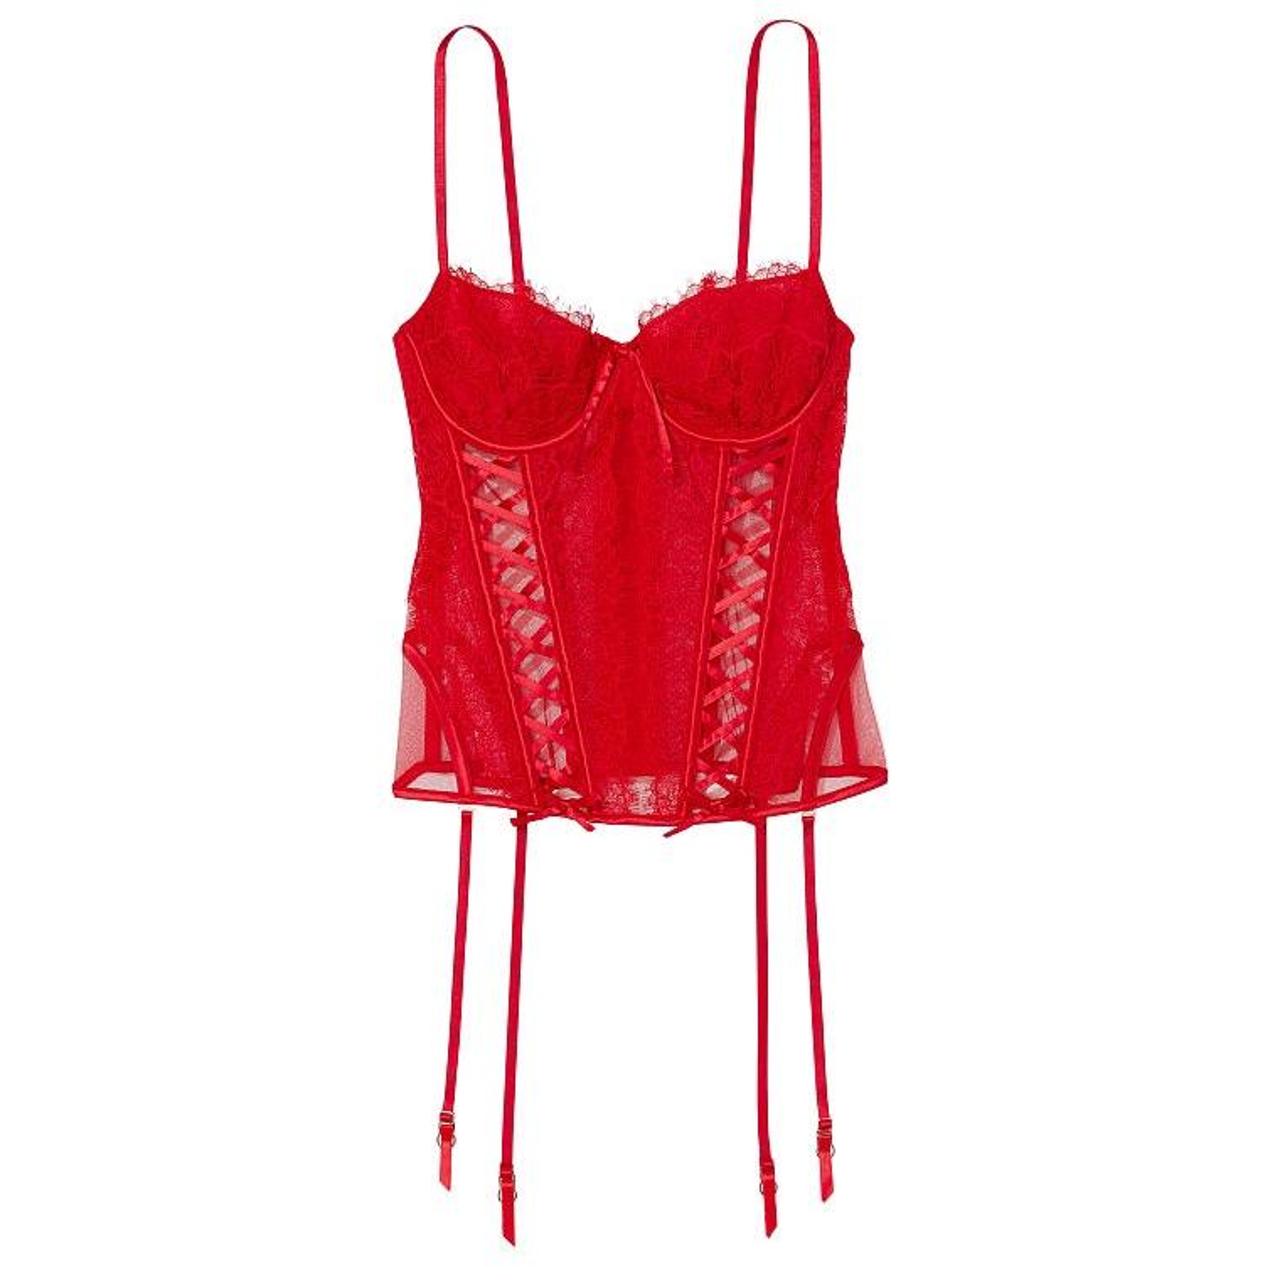 8 Red Corset Victoria Secret Images, Stock Photos, 3D objects, & Vectors